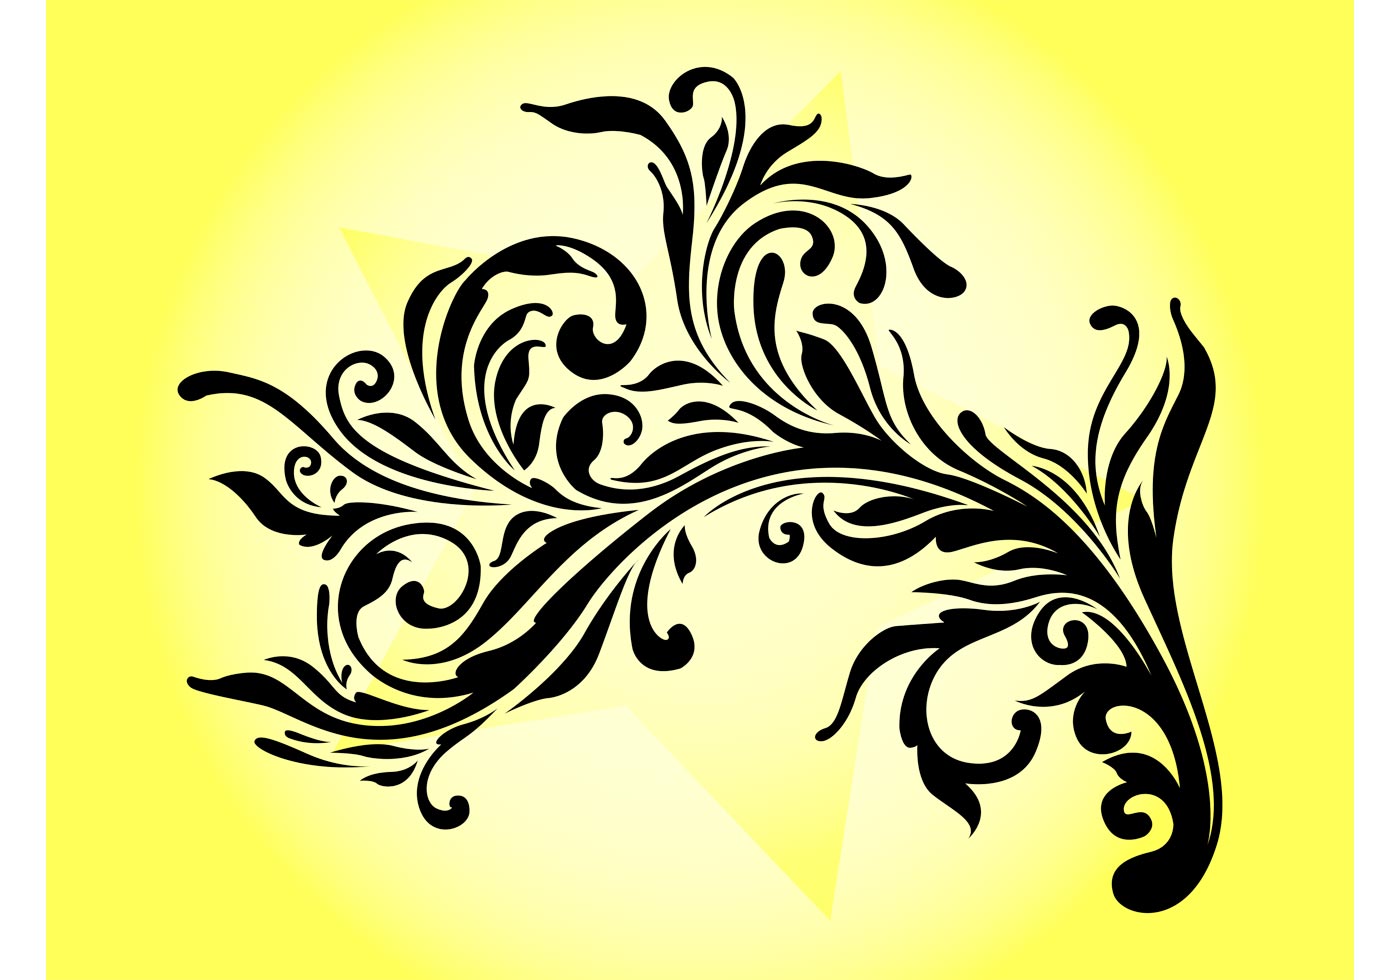 Flower Decorative Swirls - Download Free Vector Art, Stock Graphics ...